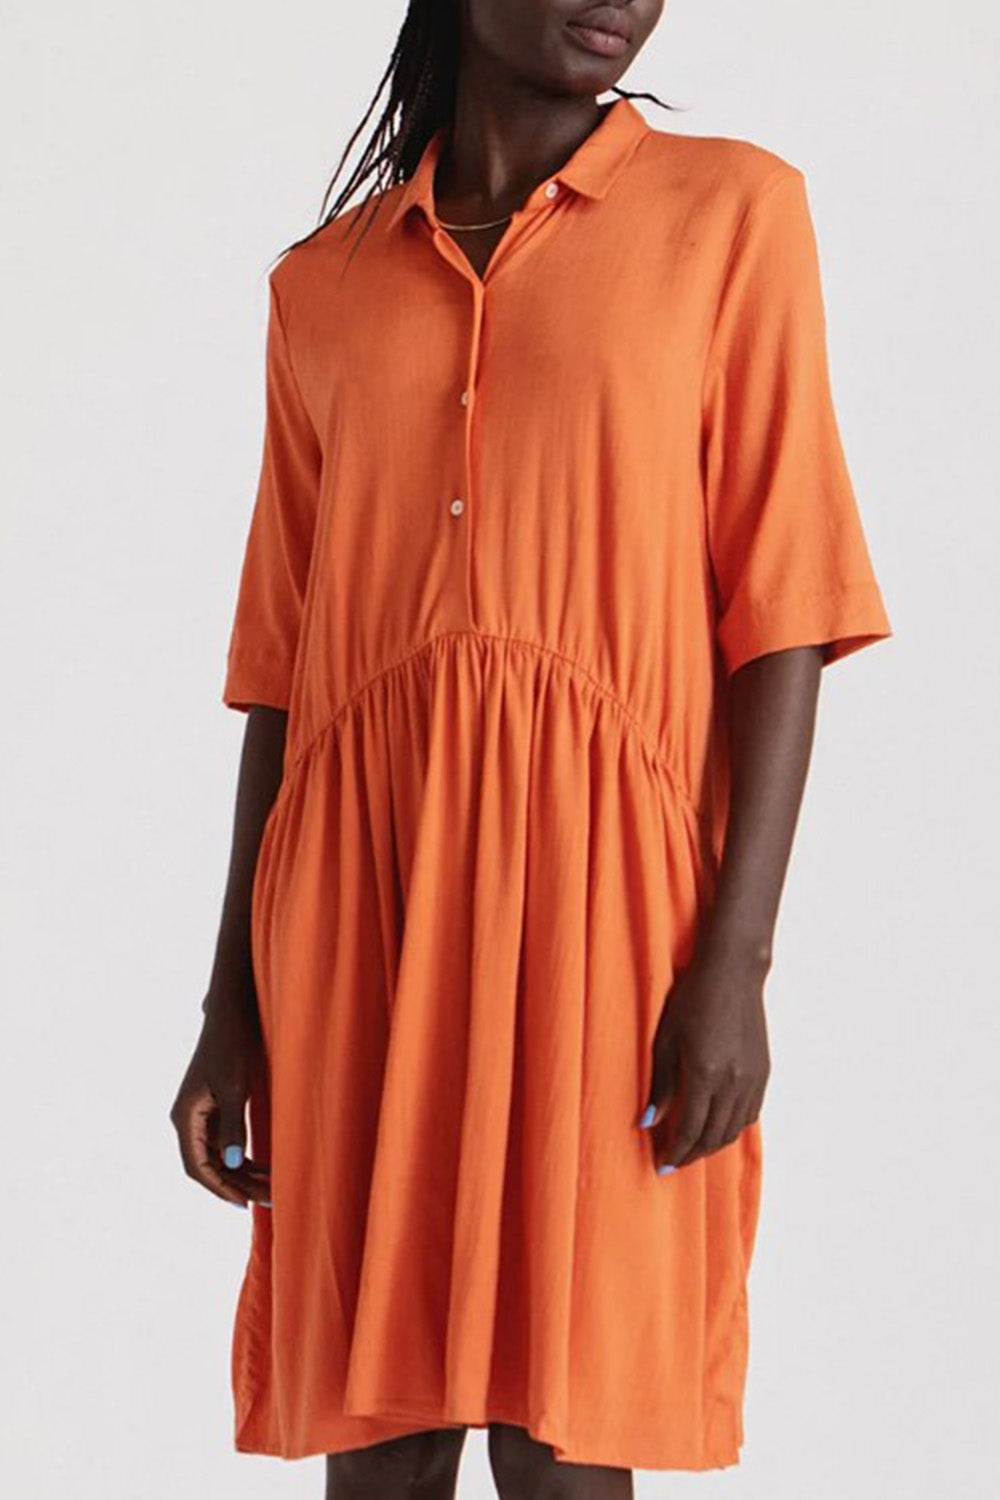 Bucolic Orange Dress